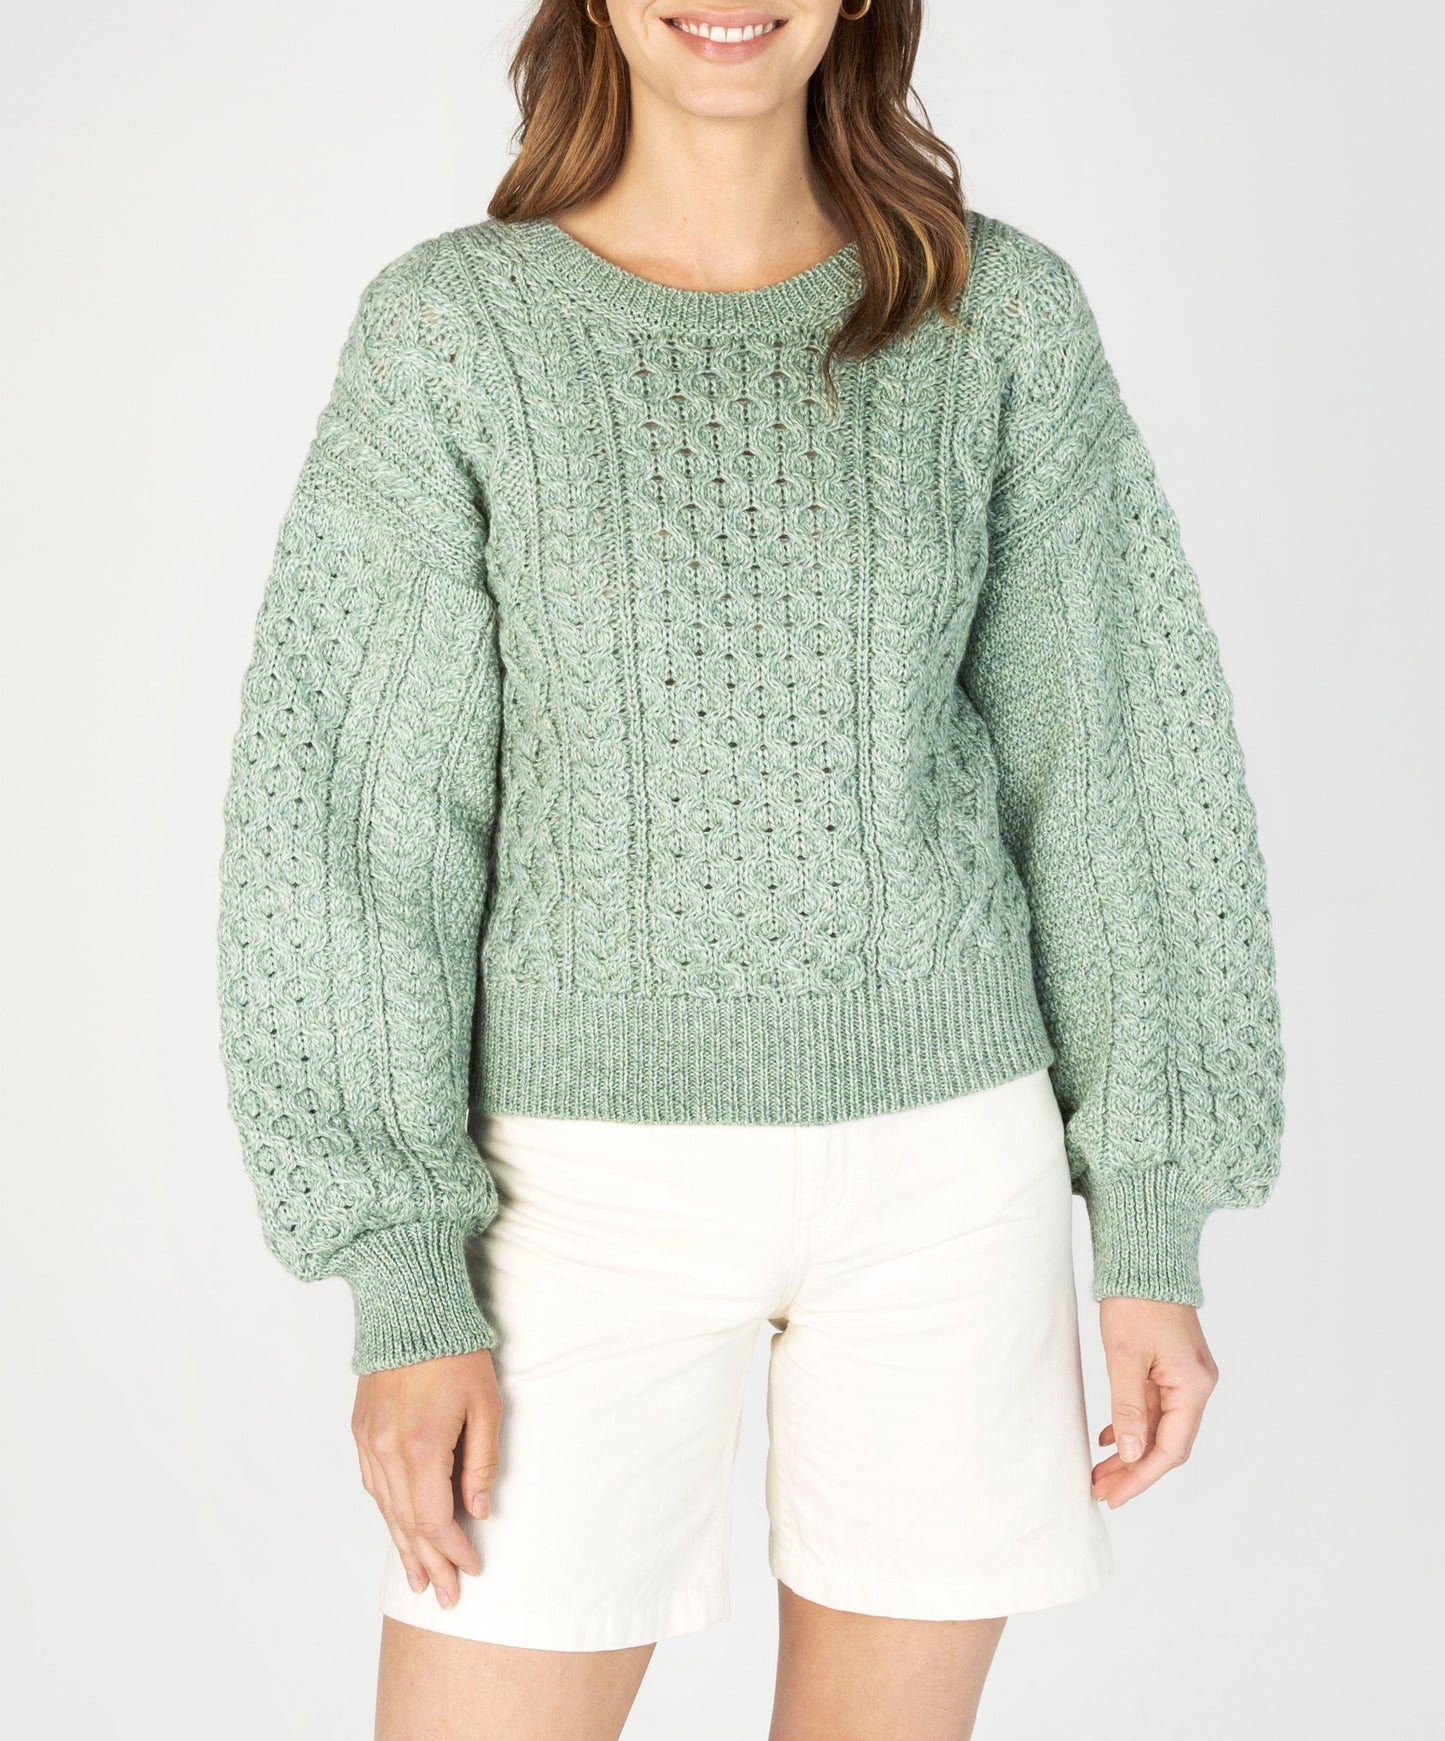 IrelandsEye Knitwear Honeysuckle Cropped Aran Sweater Sage Marl